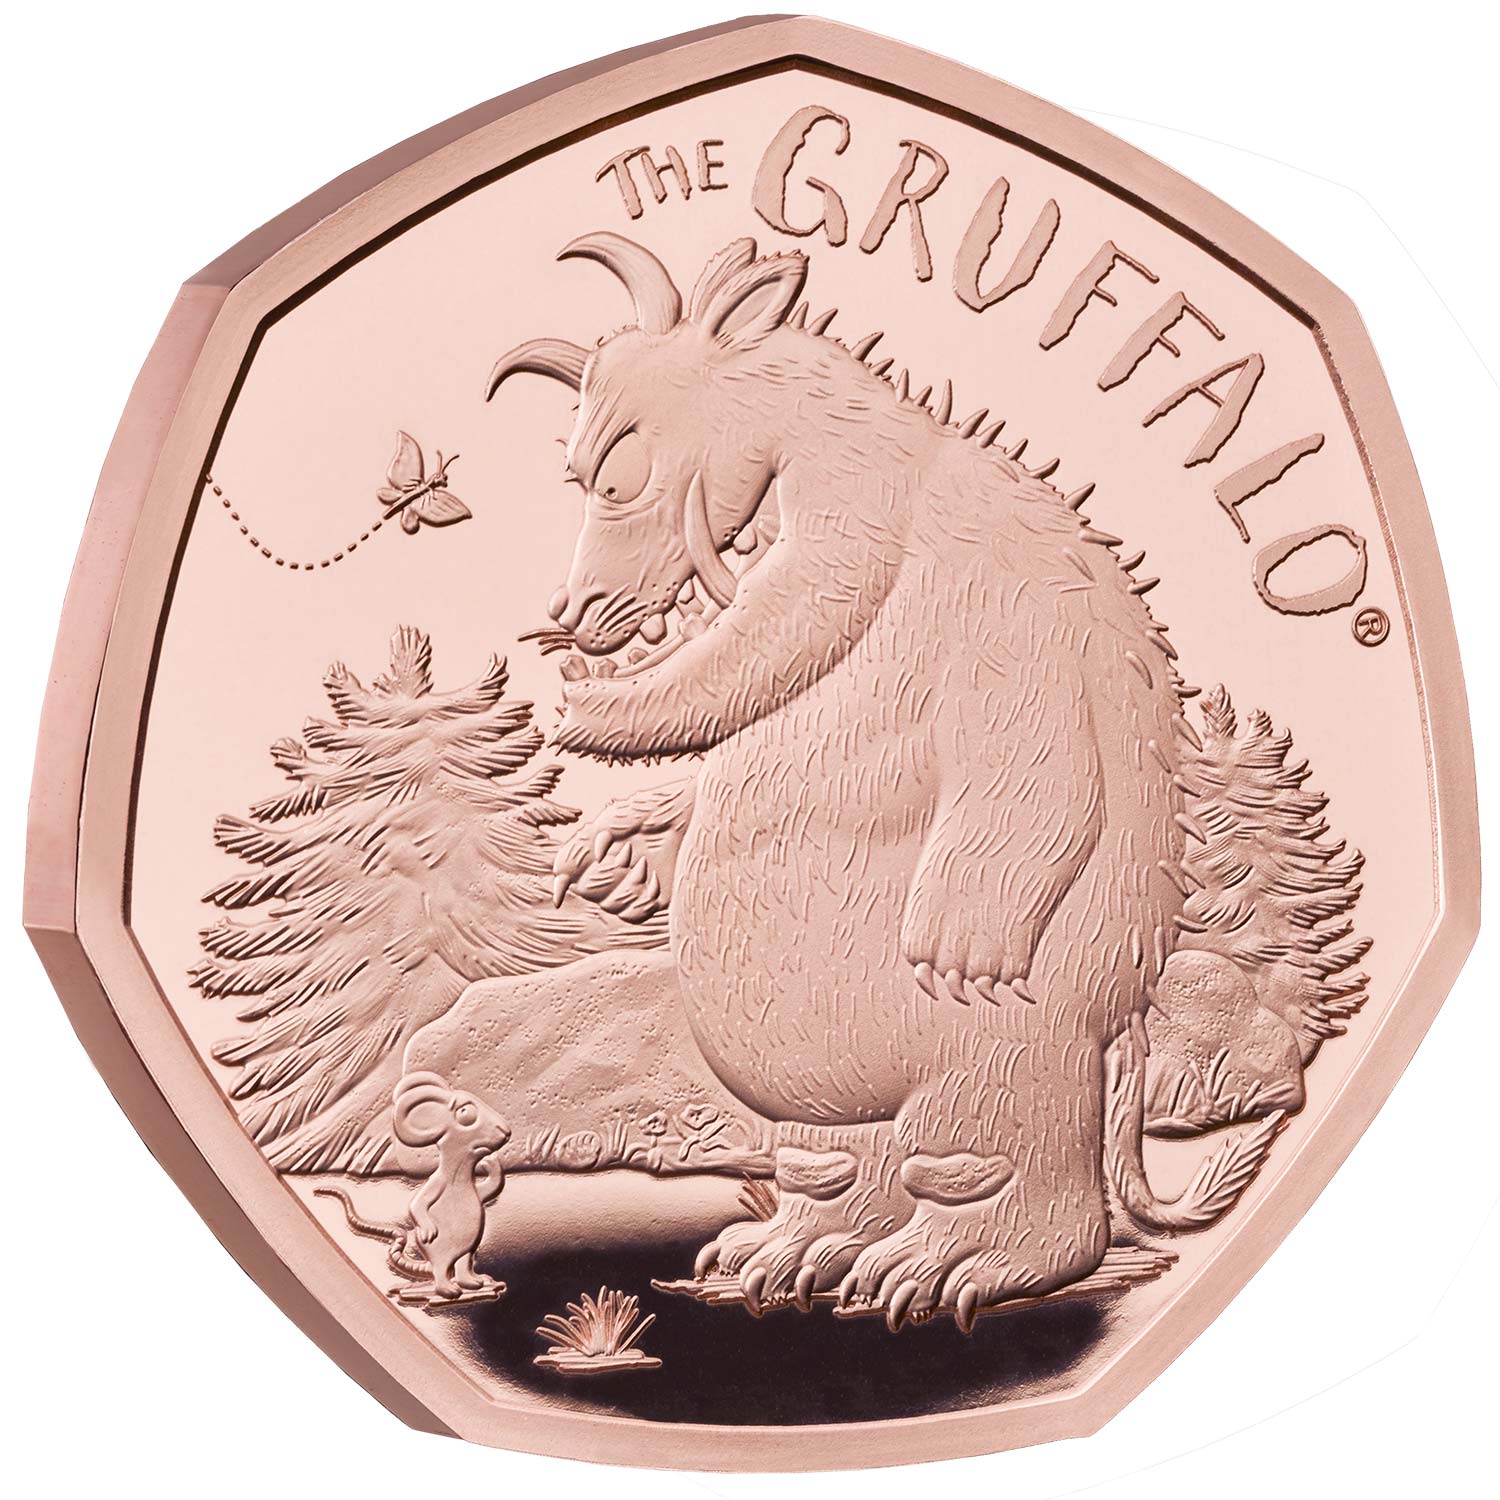 2019 Certified Brilliant Uncirculated BU 50p coin The Gruffalo